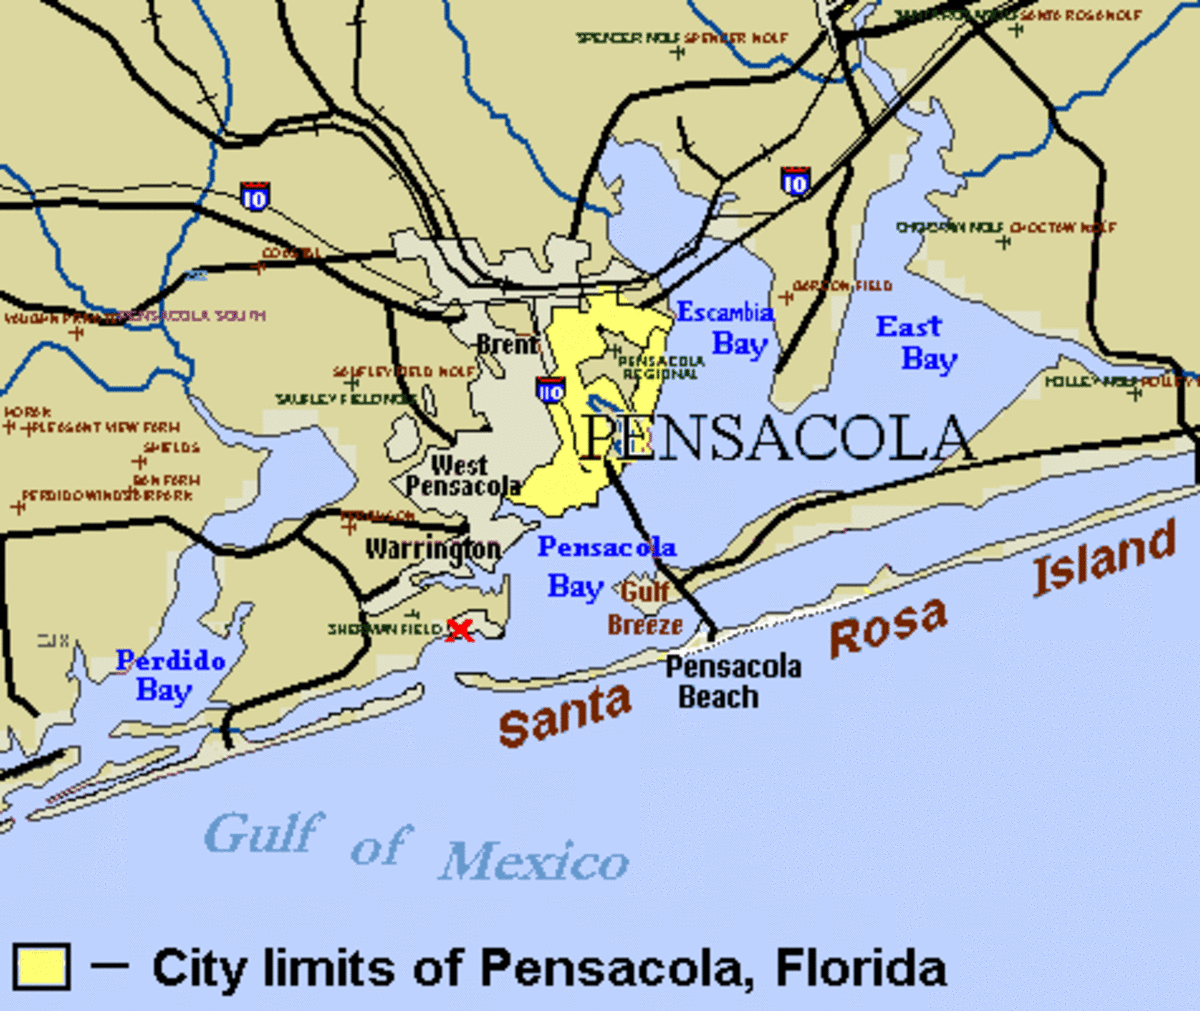 Pensacola Naval Air Station Historic District